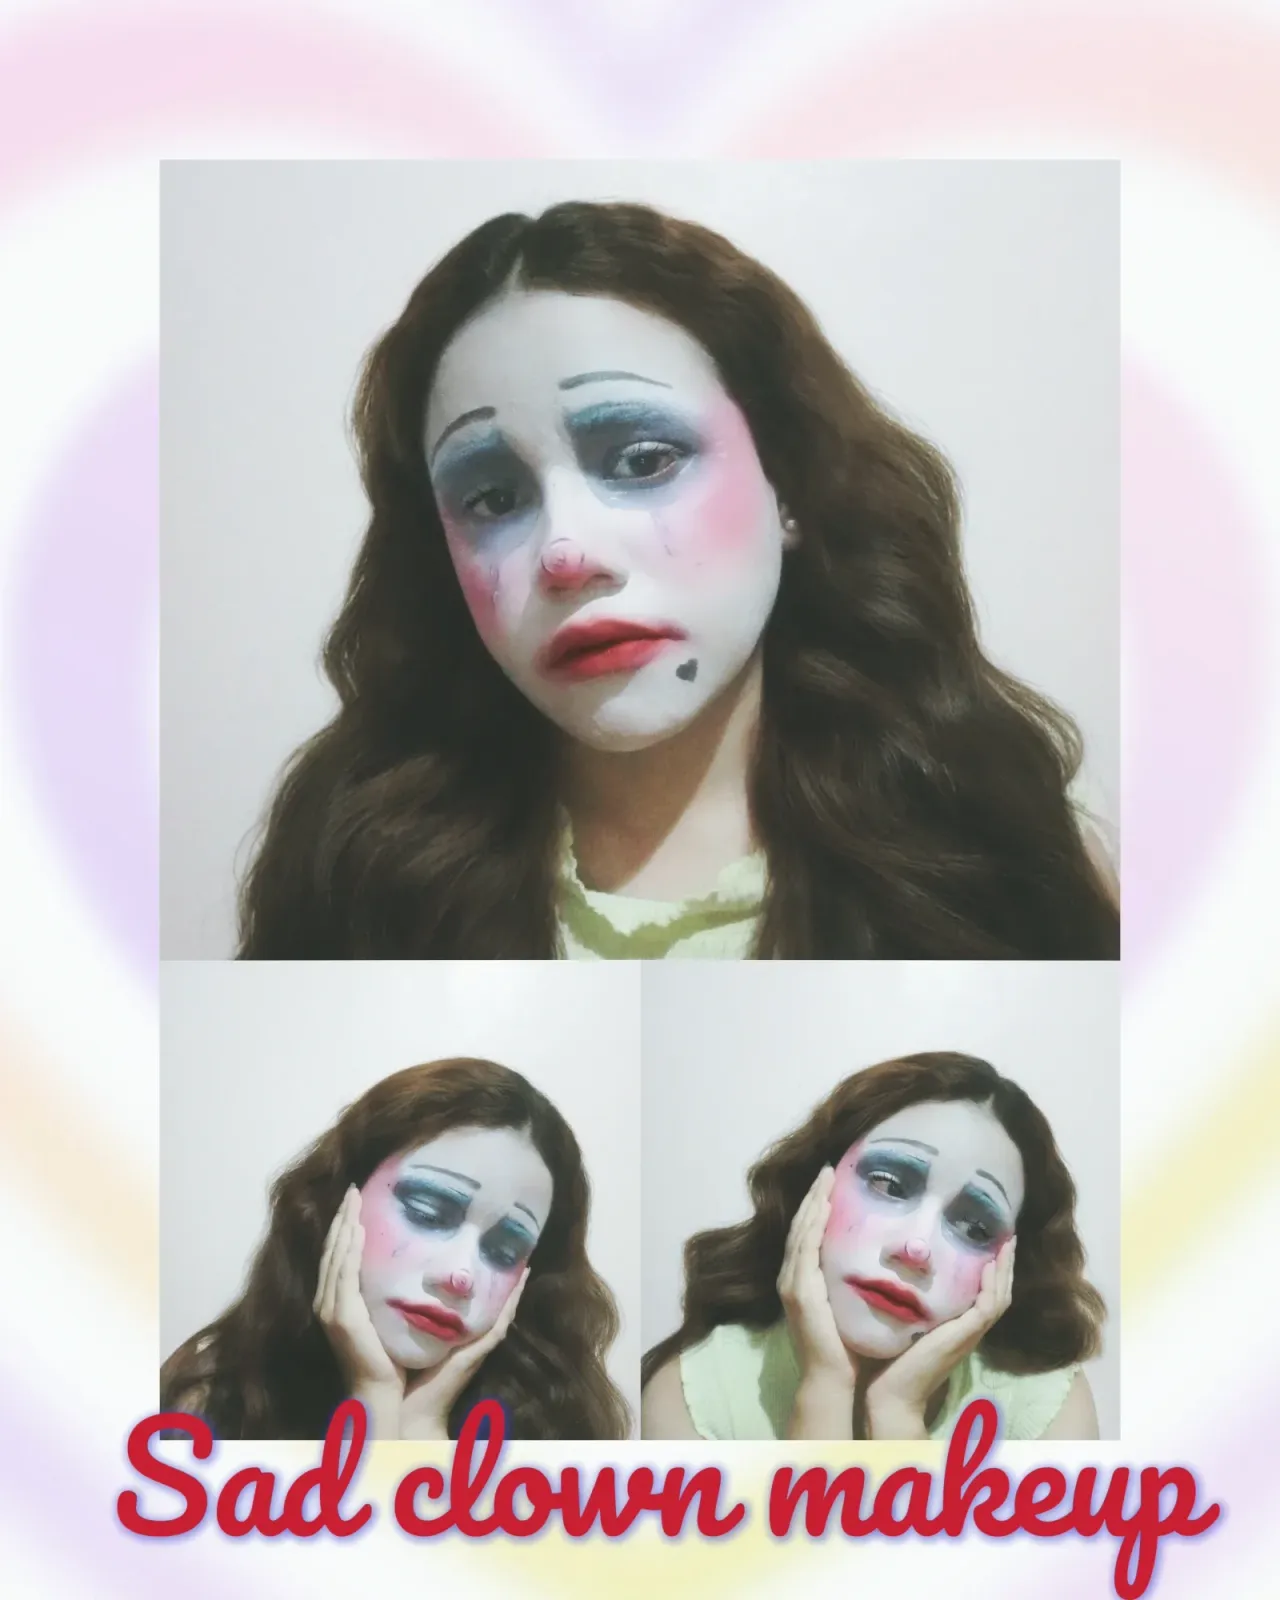 [ENG - SPA] 🤡🎈Maquillaje de payaso triste | Sad Clown Makeup 🤡🎈